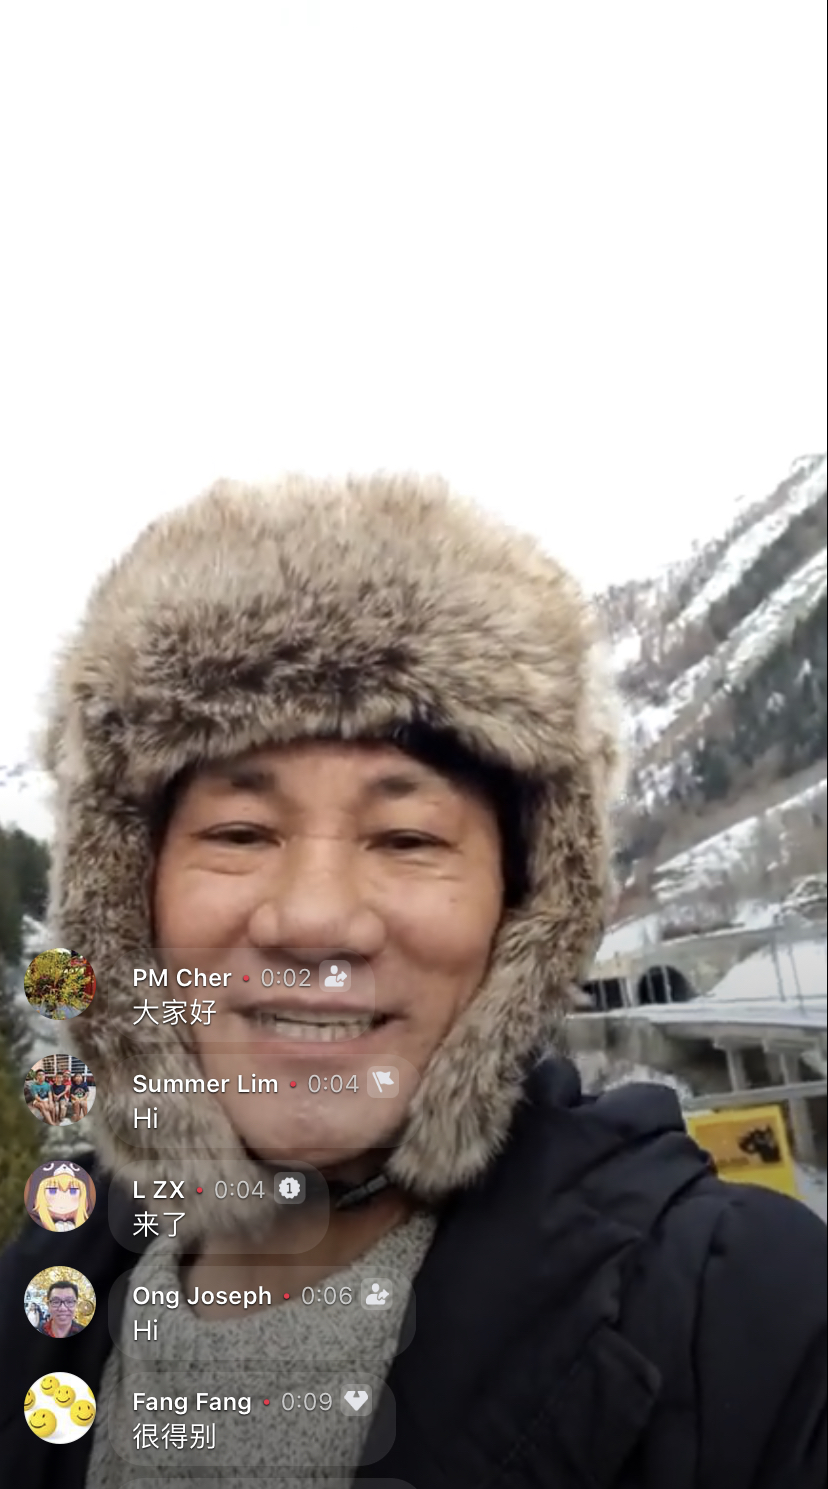 Wang lei latest livestream